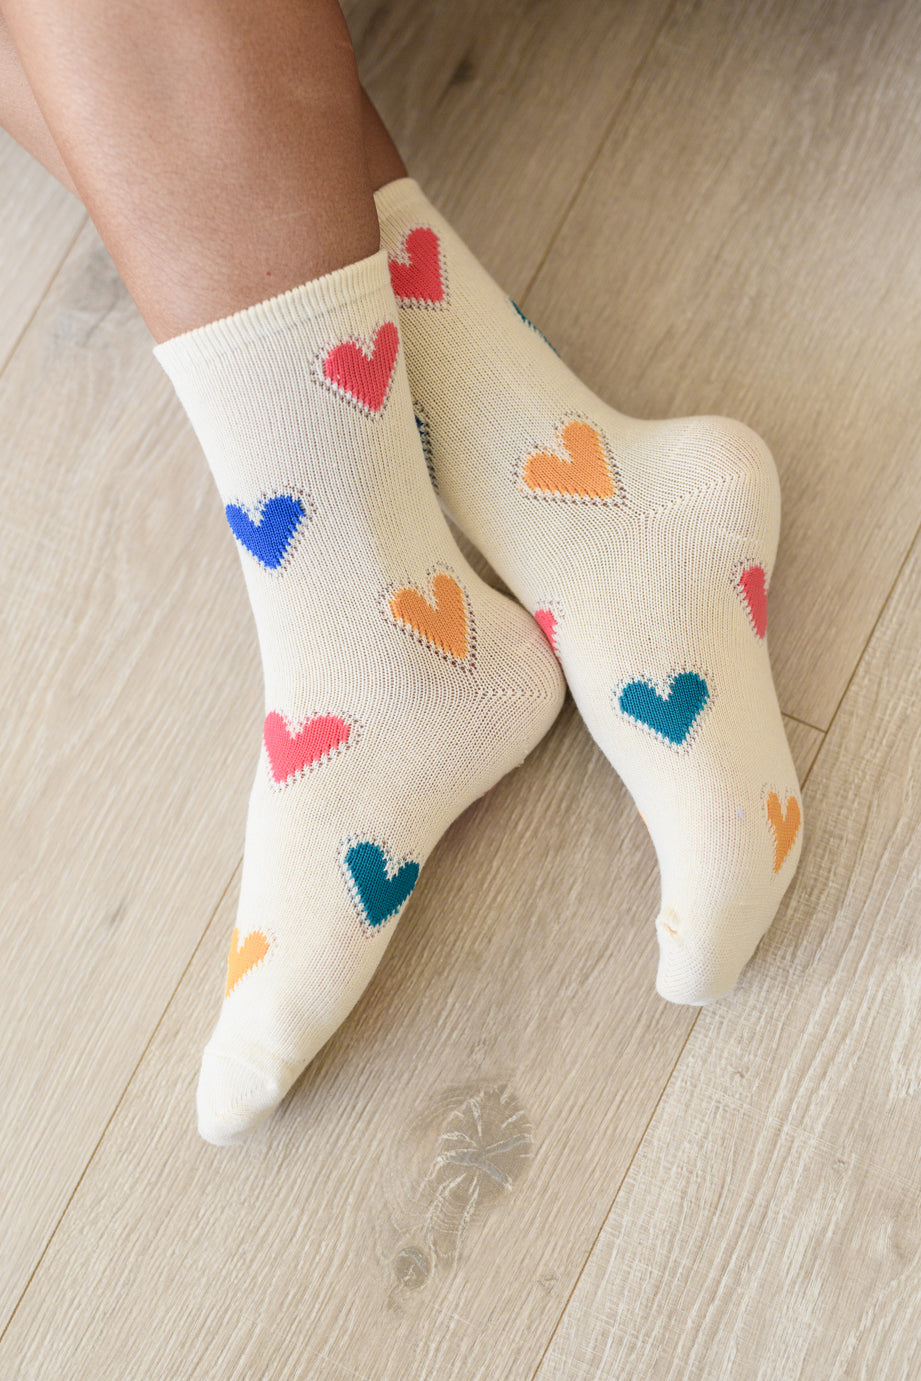 Woven Hearts Everyday Socks Set of 3